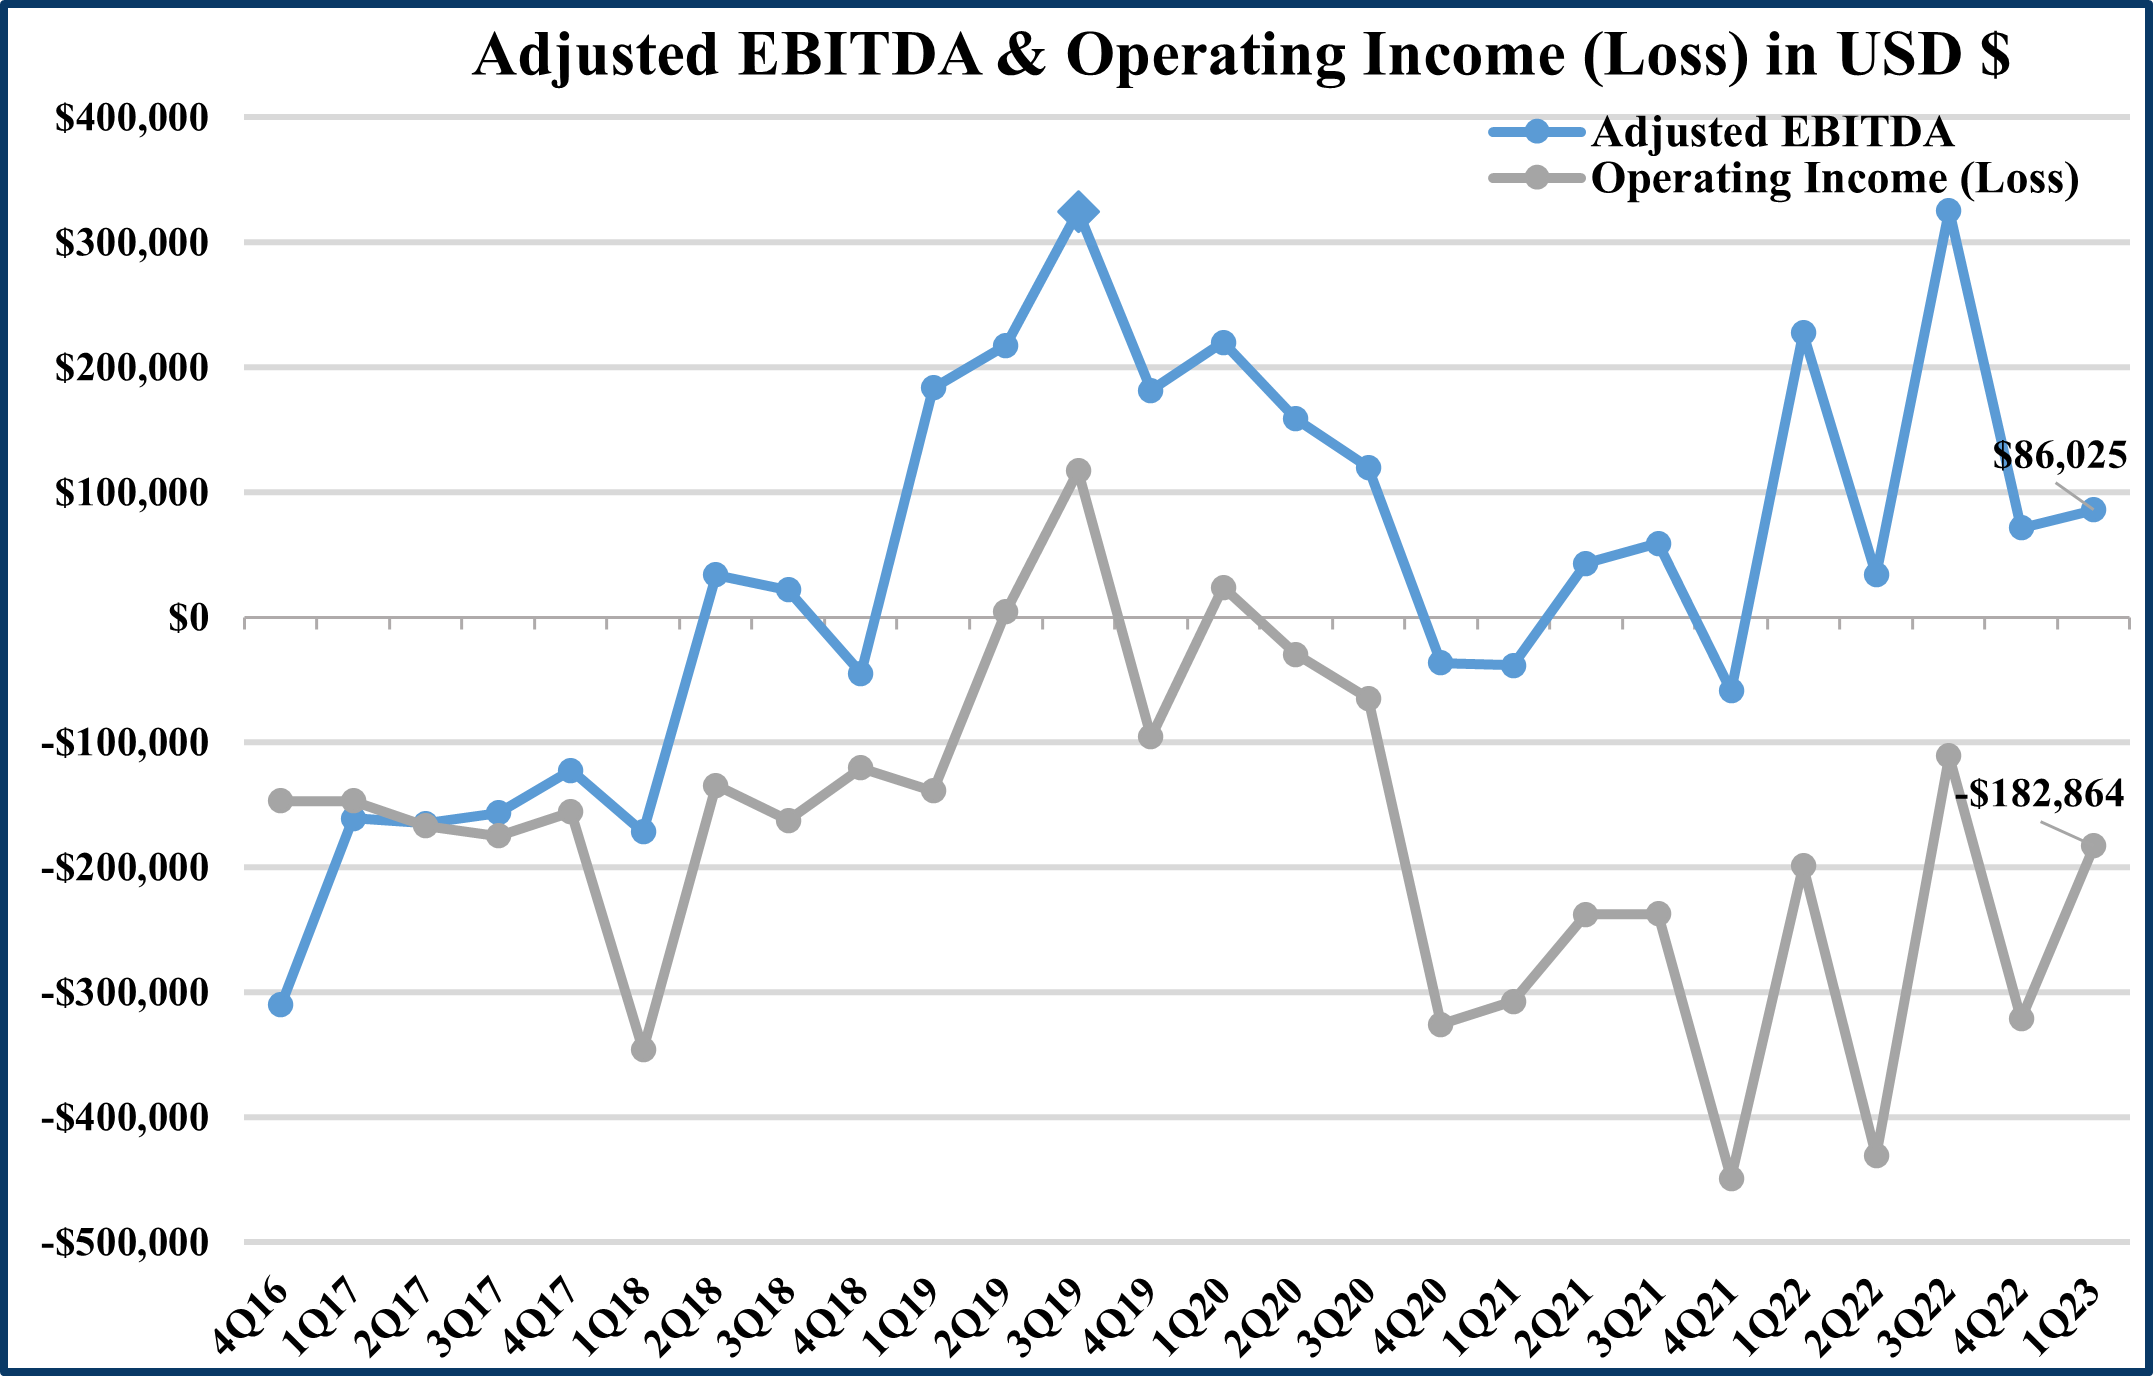 Adjusted EBITDA and Operating Loss